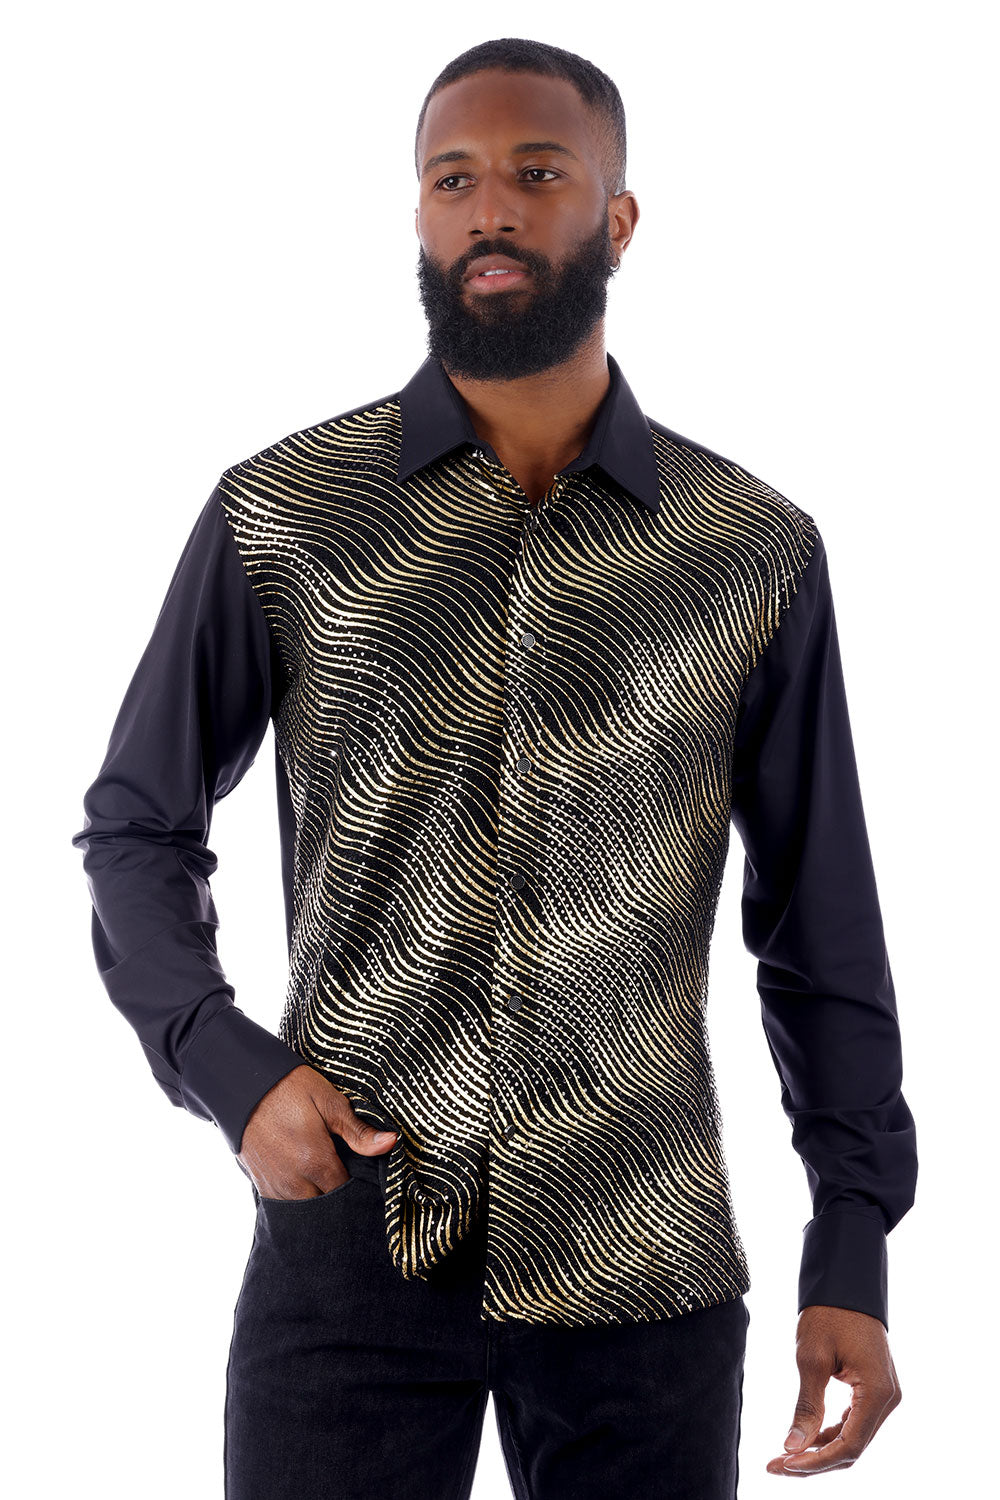 BARABAS Men's Polka Dot Linear Geometric Long Sleeve Shirt 4B43 Black